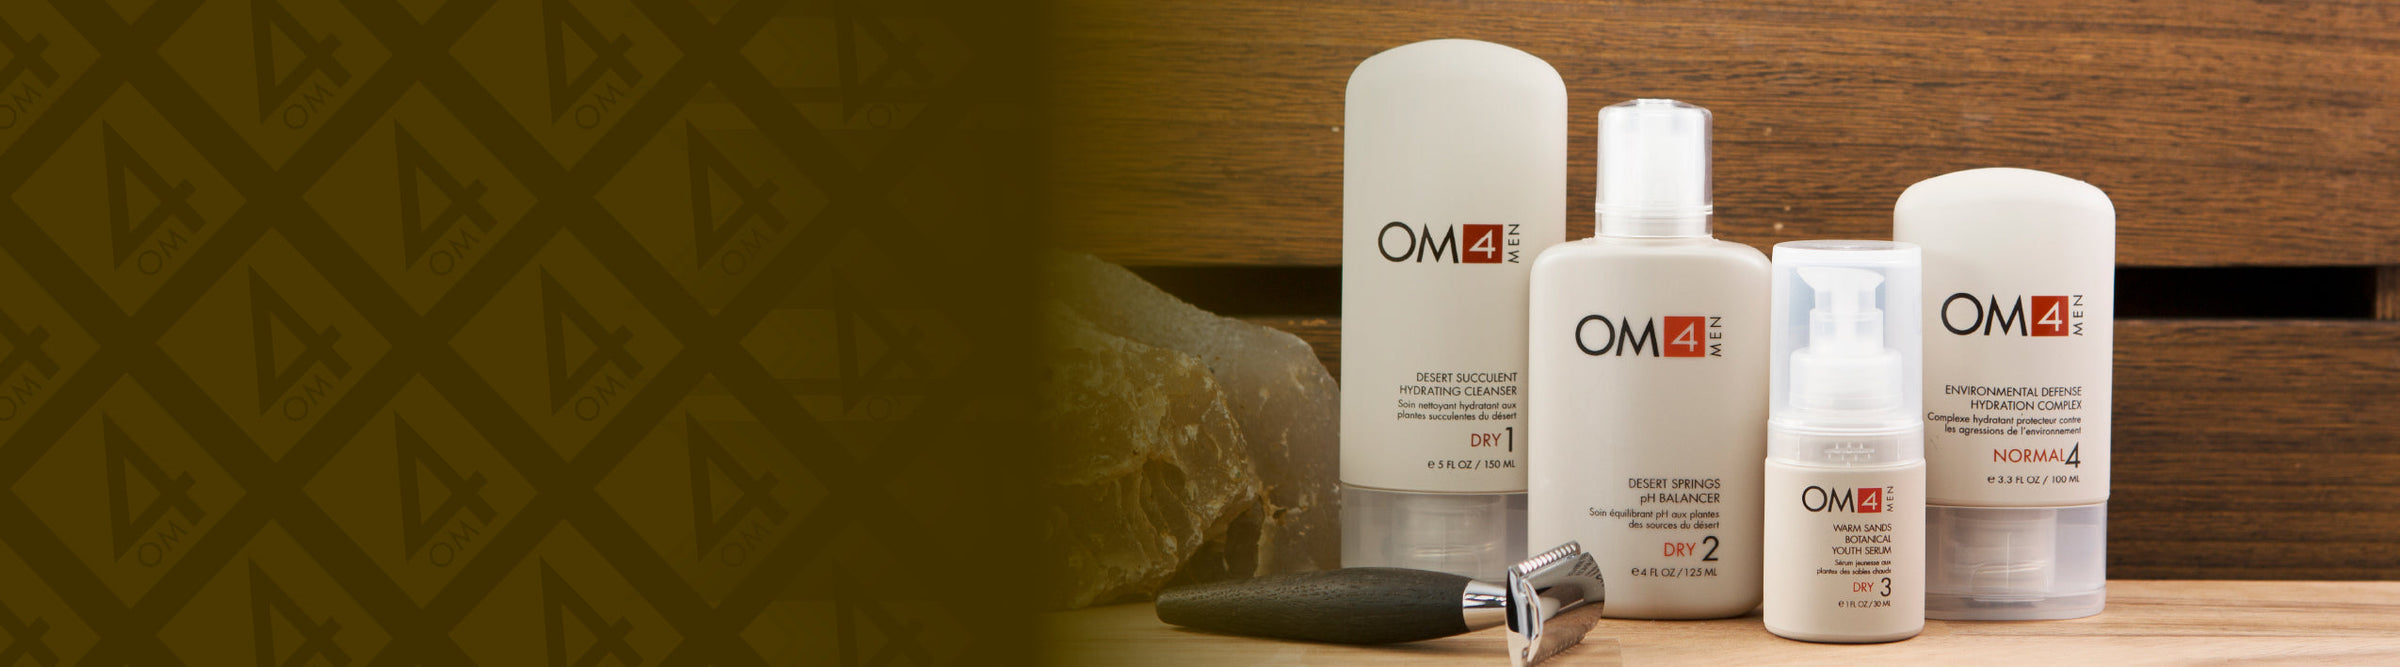 OM4 Organic Male Dry Mature Skin